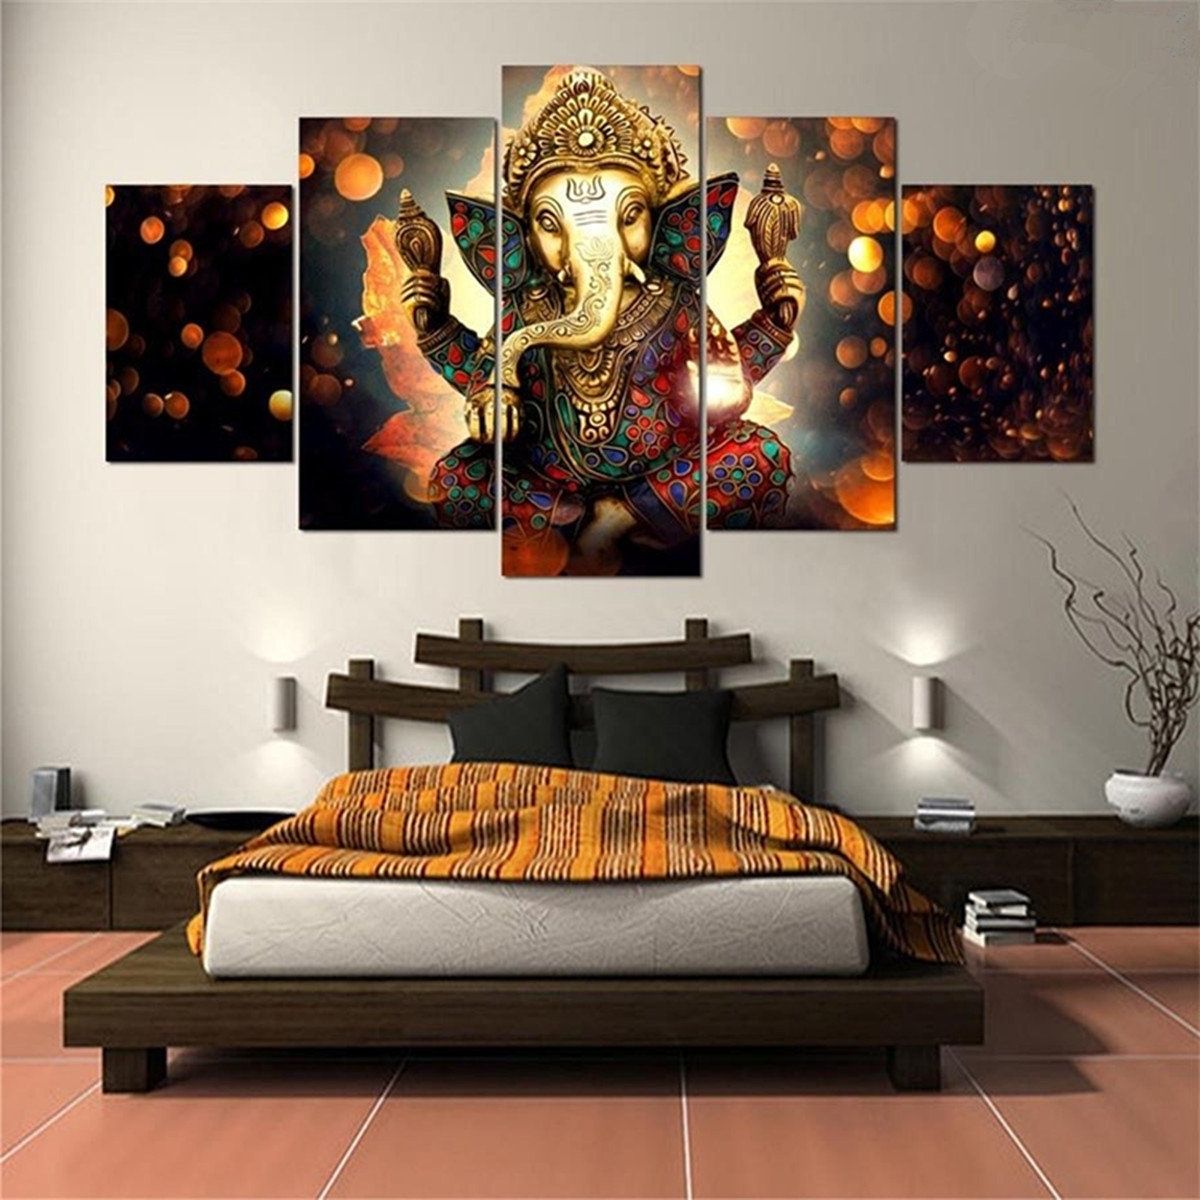 Abstract Ganesha Wall Art Regarding Most Popular 5 Pcs Ganesha Painting Abstract Picture Modern Canvas Wall Art (View 5 of 15)